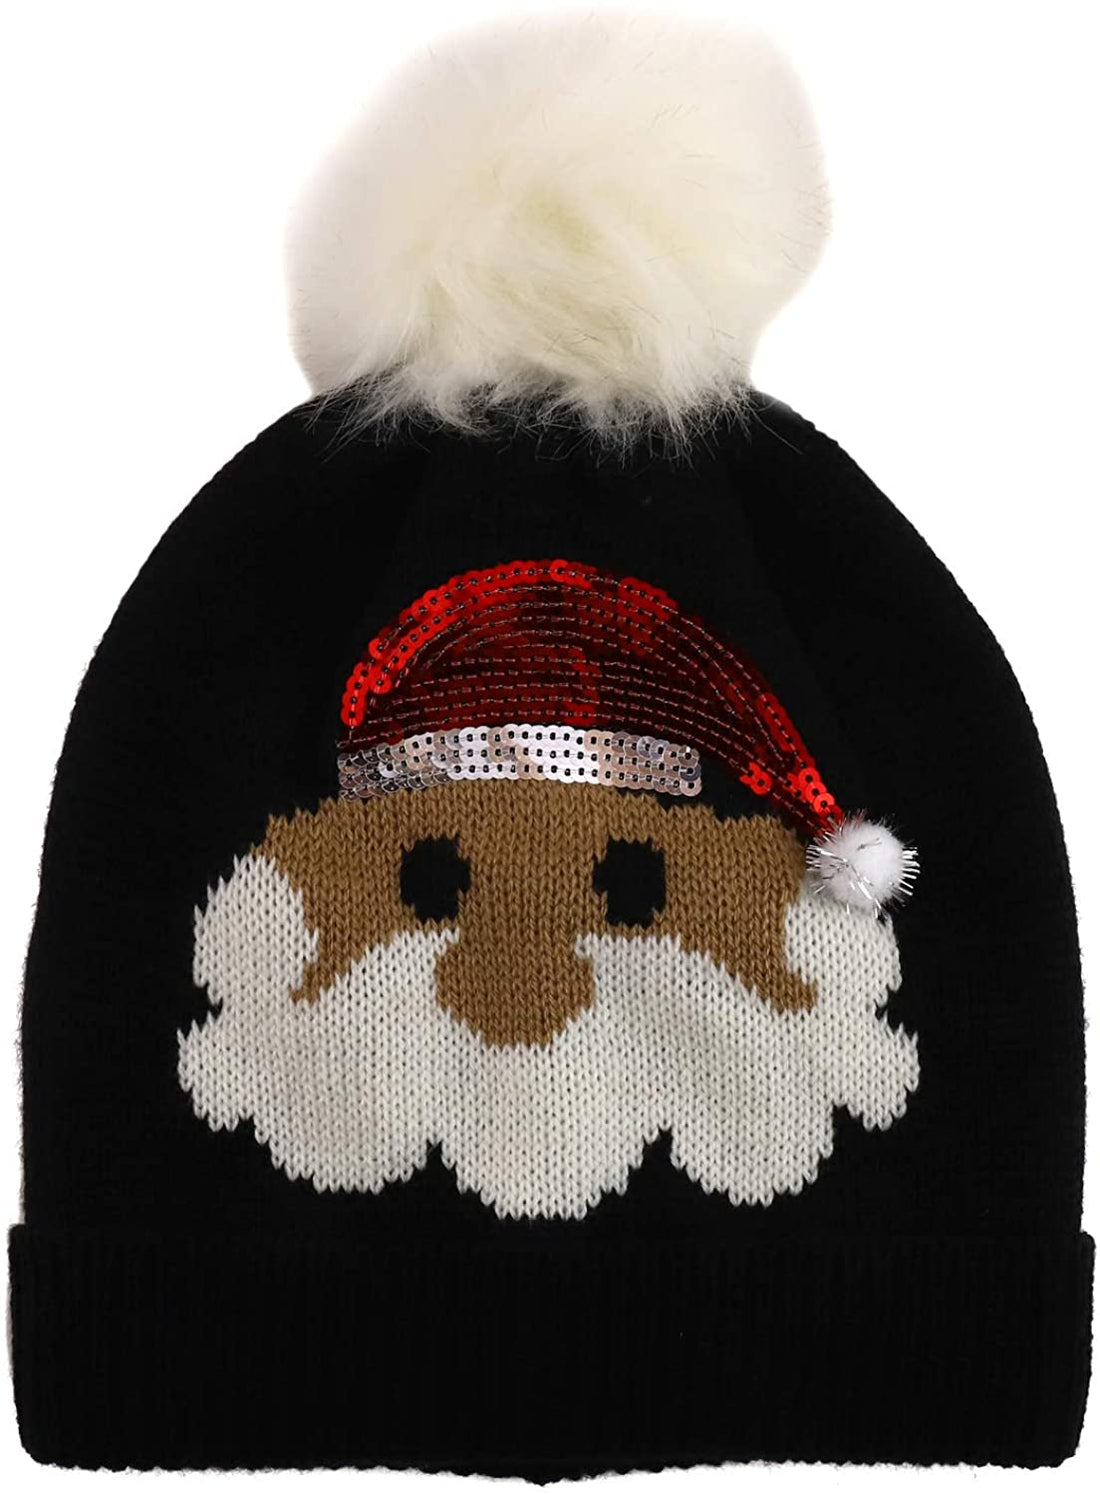 Trendy Apparel Shop Christmas Themed Funny Ugly Holiday Pom Knit Beanie Hats - Santas Belt